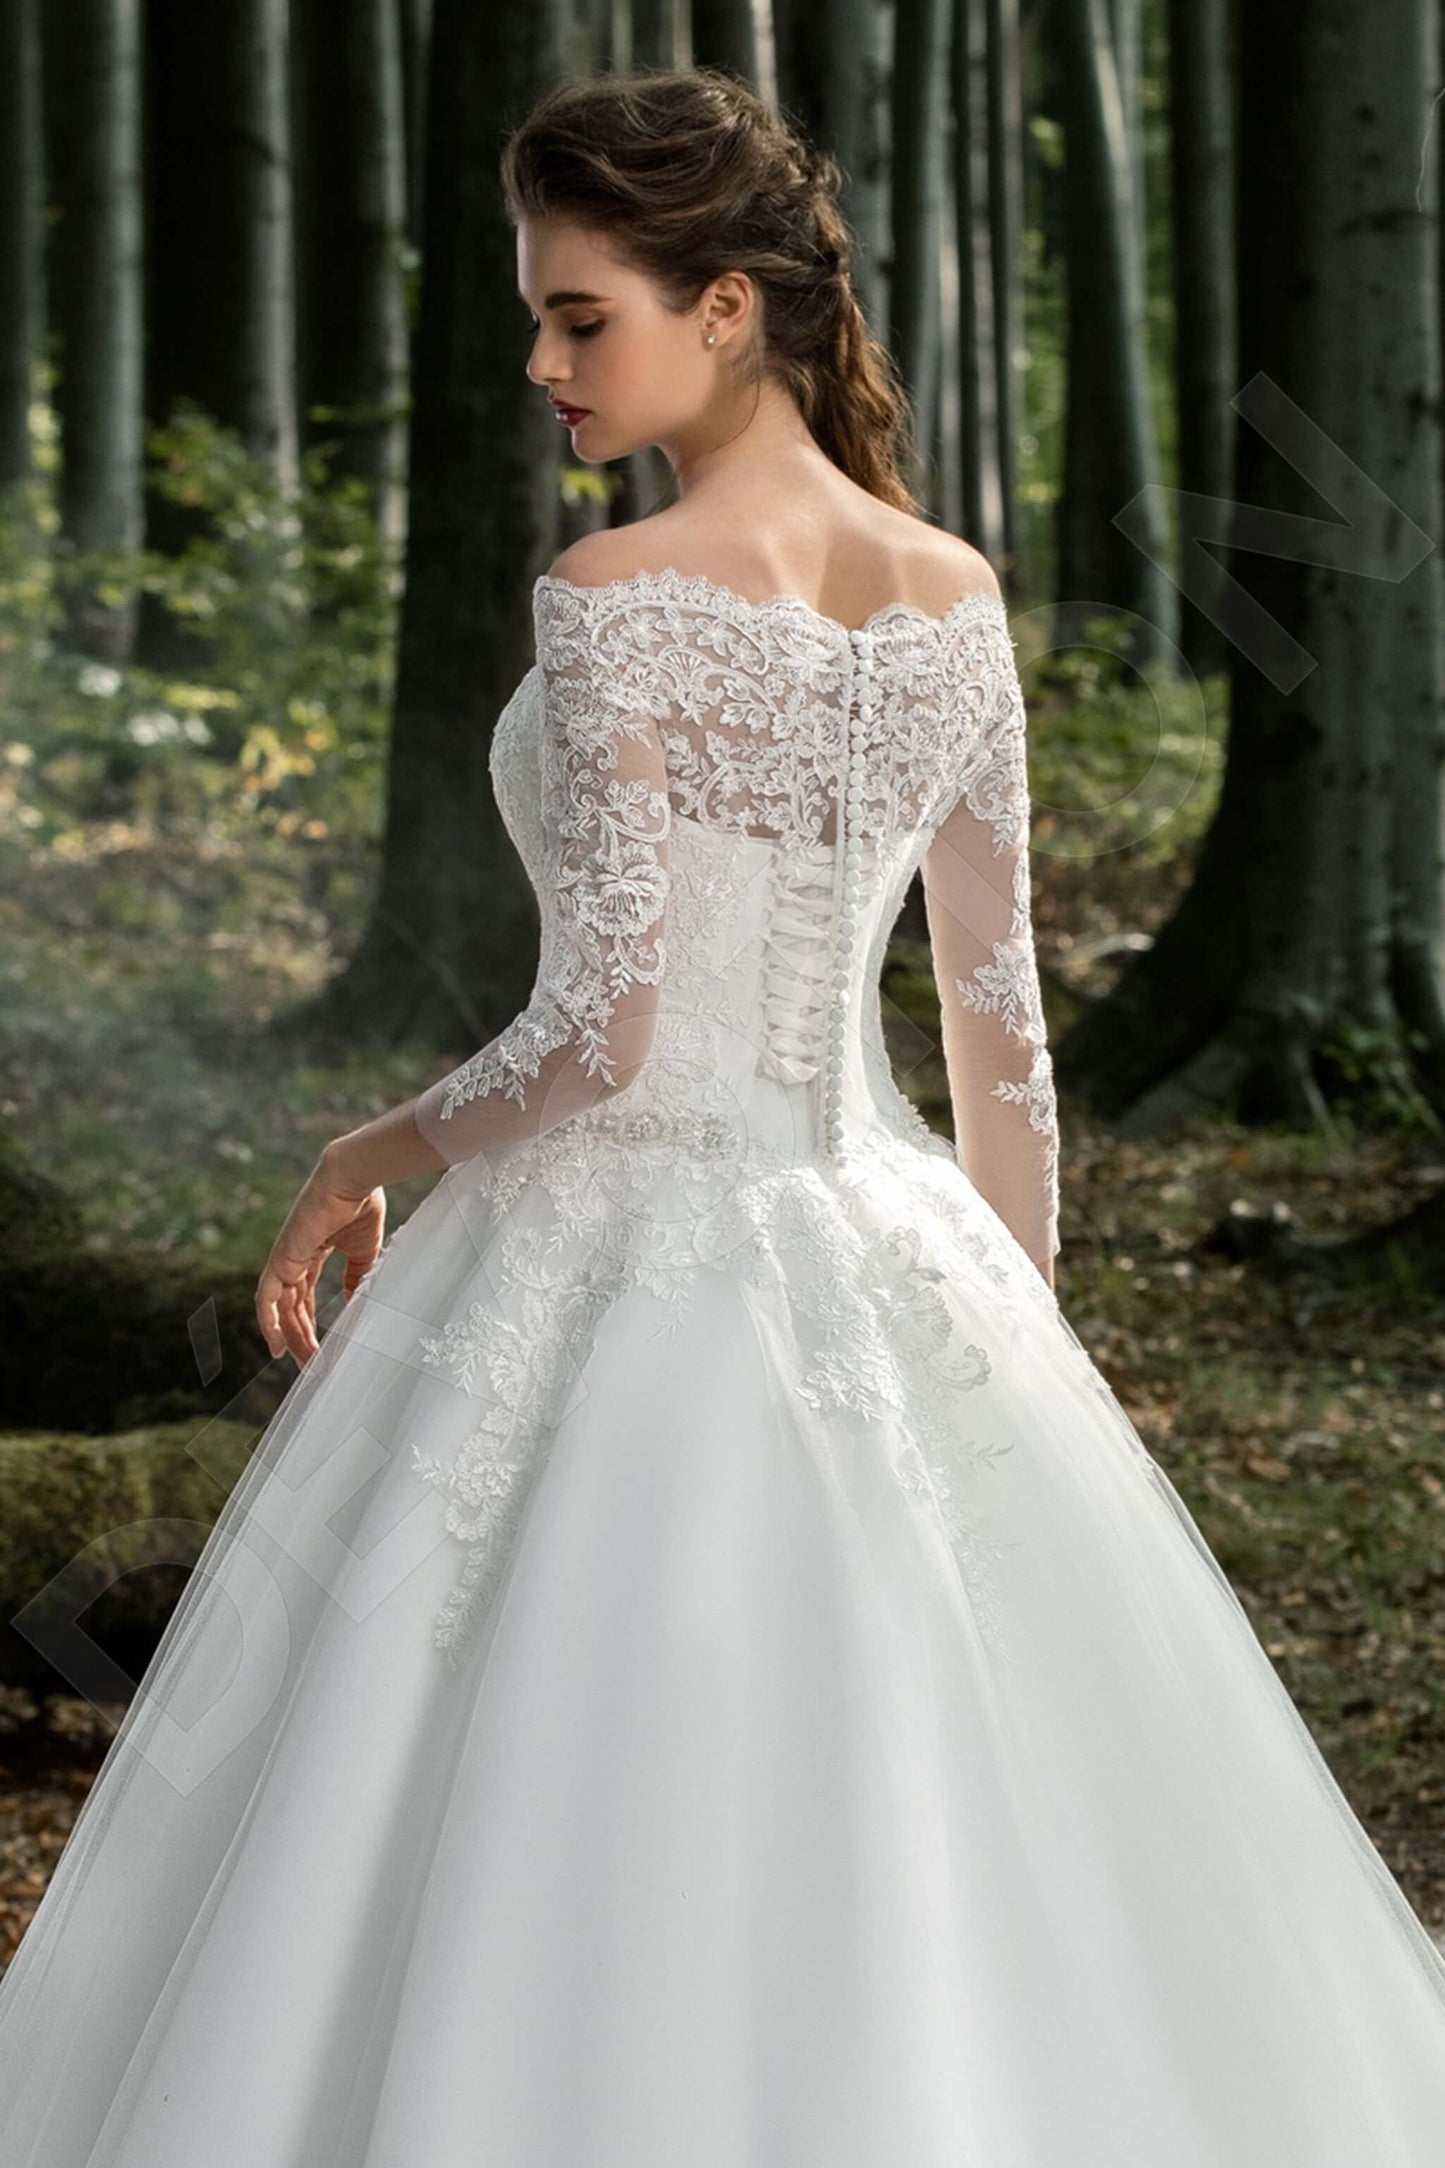 Jezebelle Full back Princess/Ball Gown 3/4 sleeve Wedding Dress 4